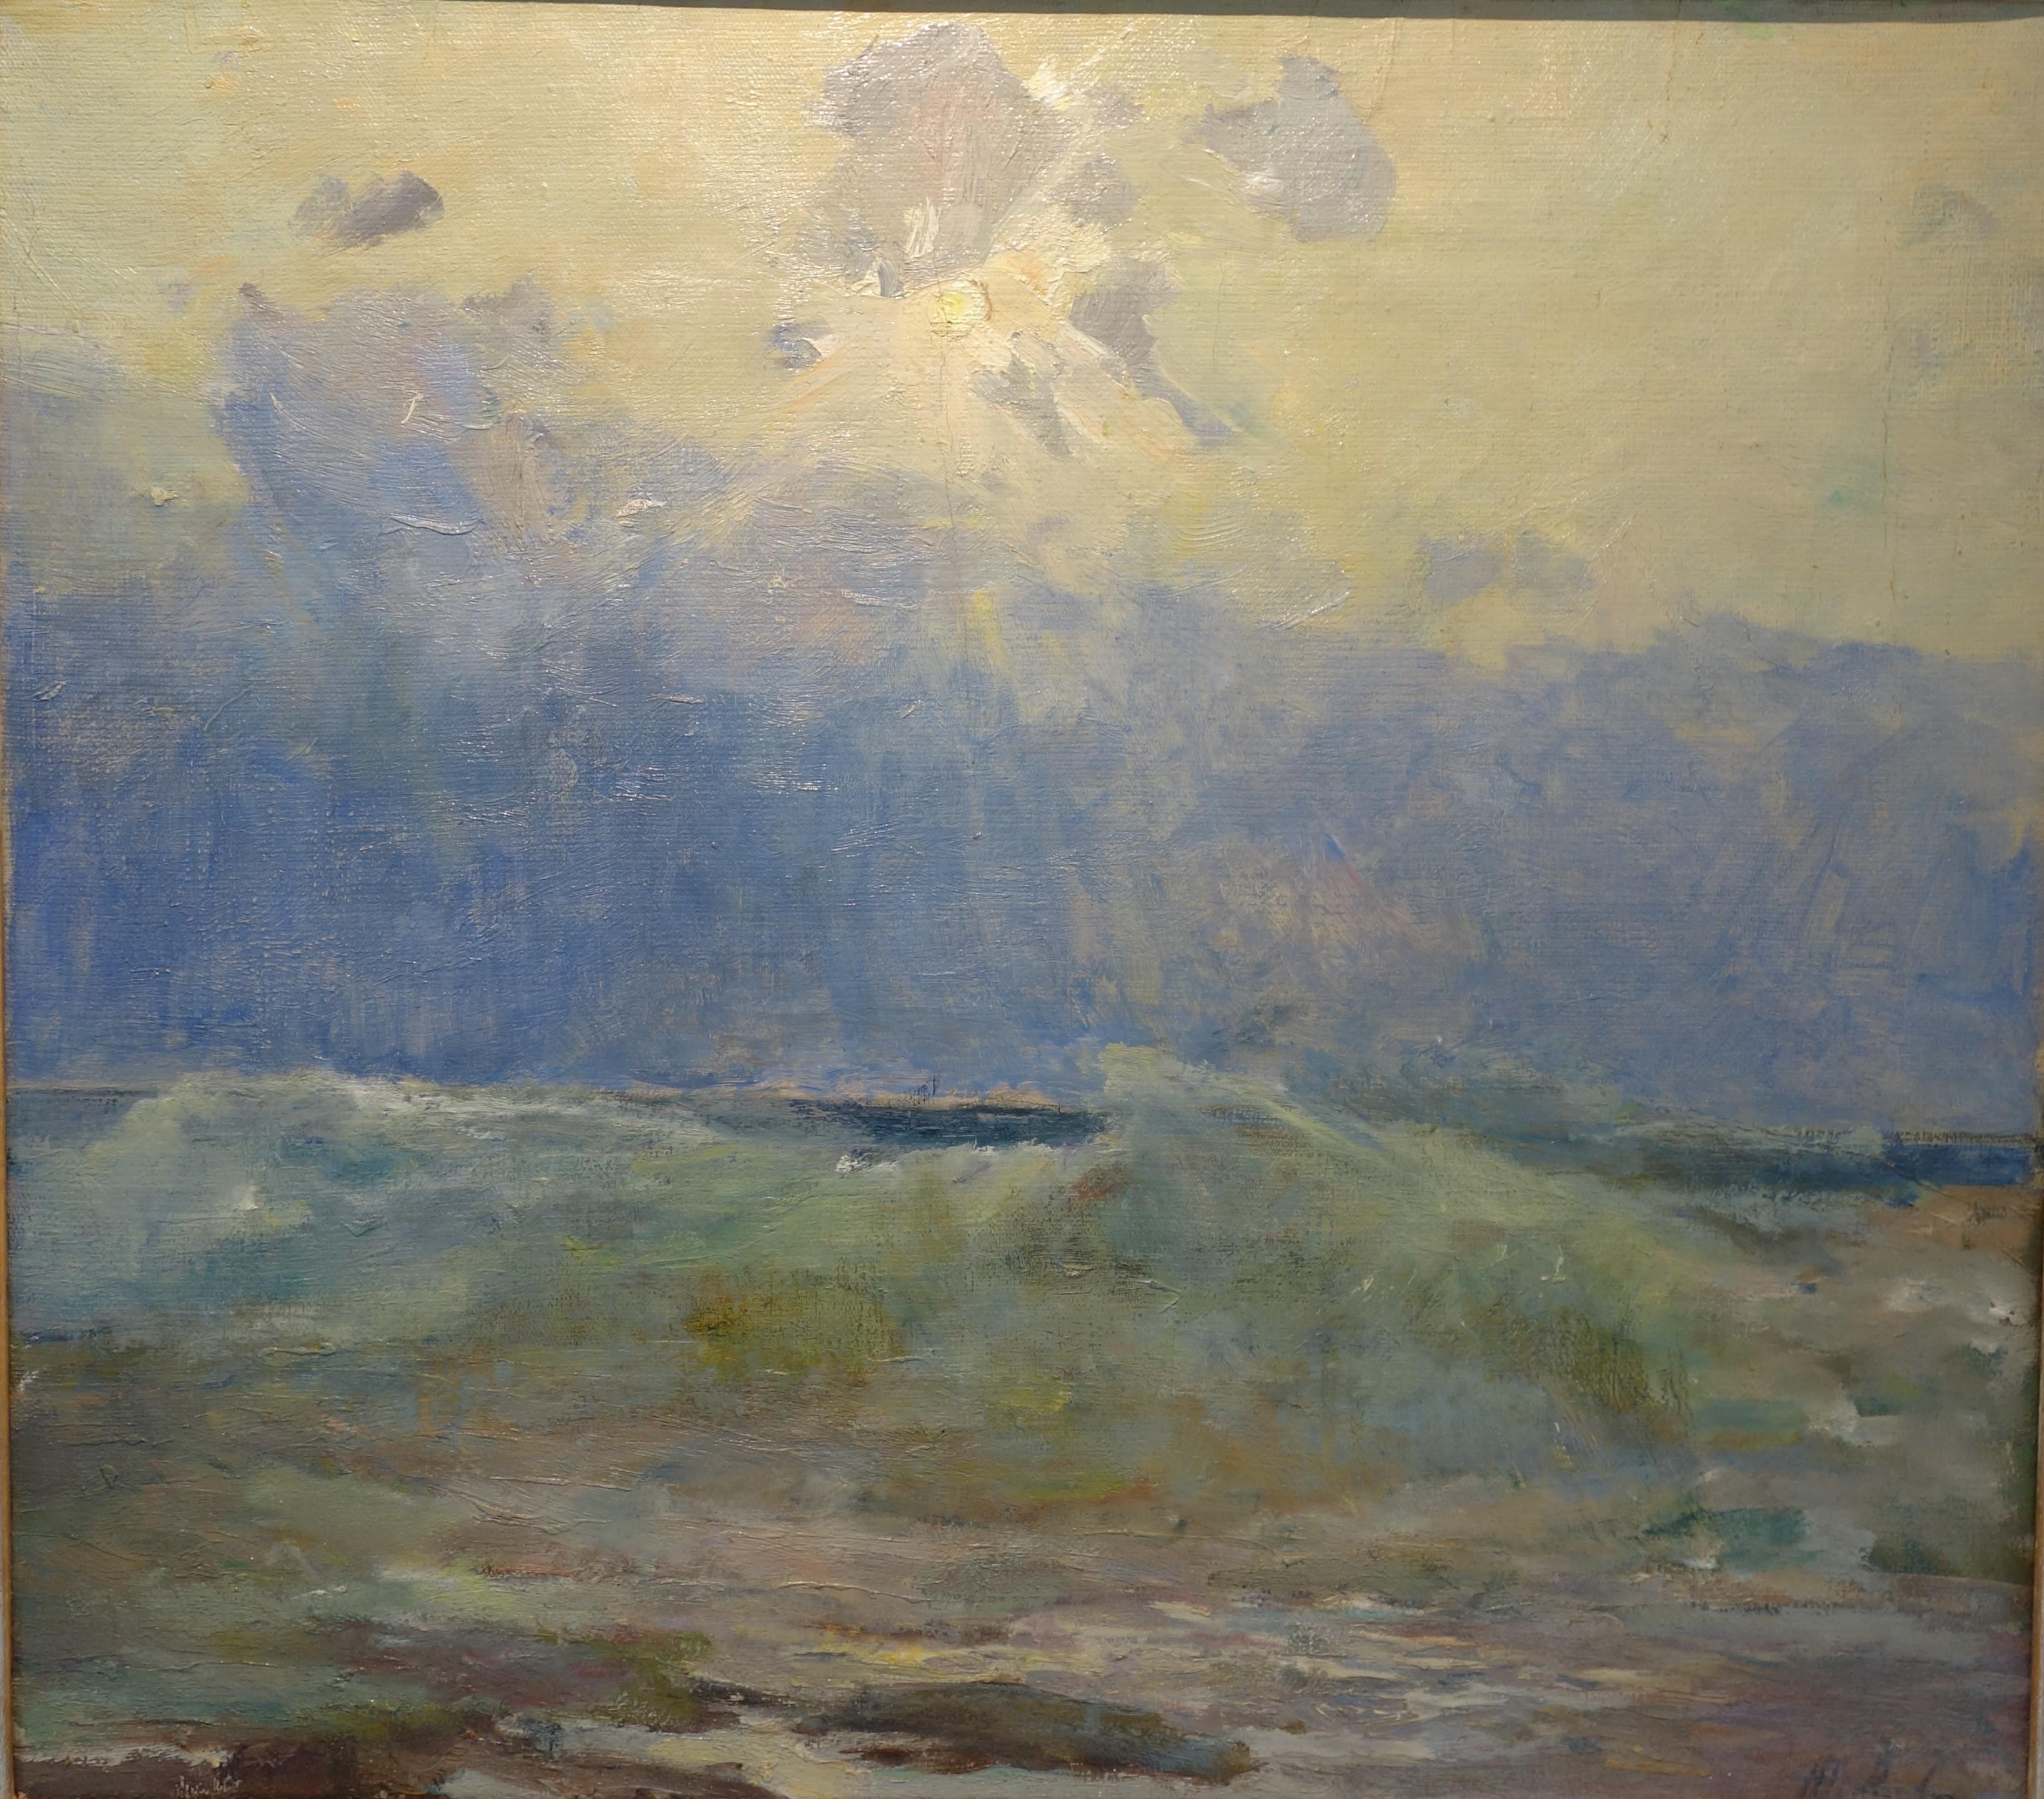 Sea, Waves  Oil  cm. 64 x 54 Light blue, Offer Free Shipping - Painting by Vladimir Joukov